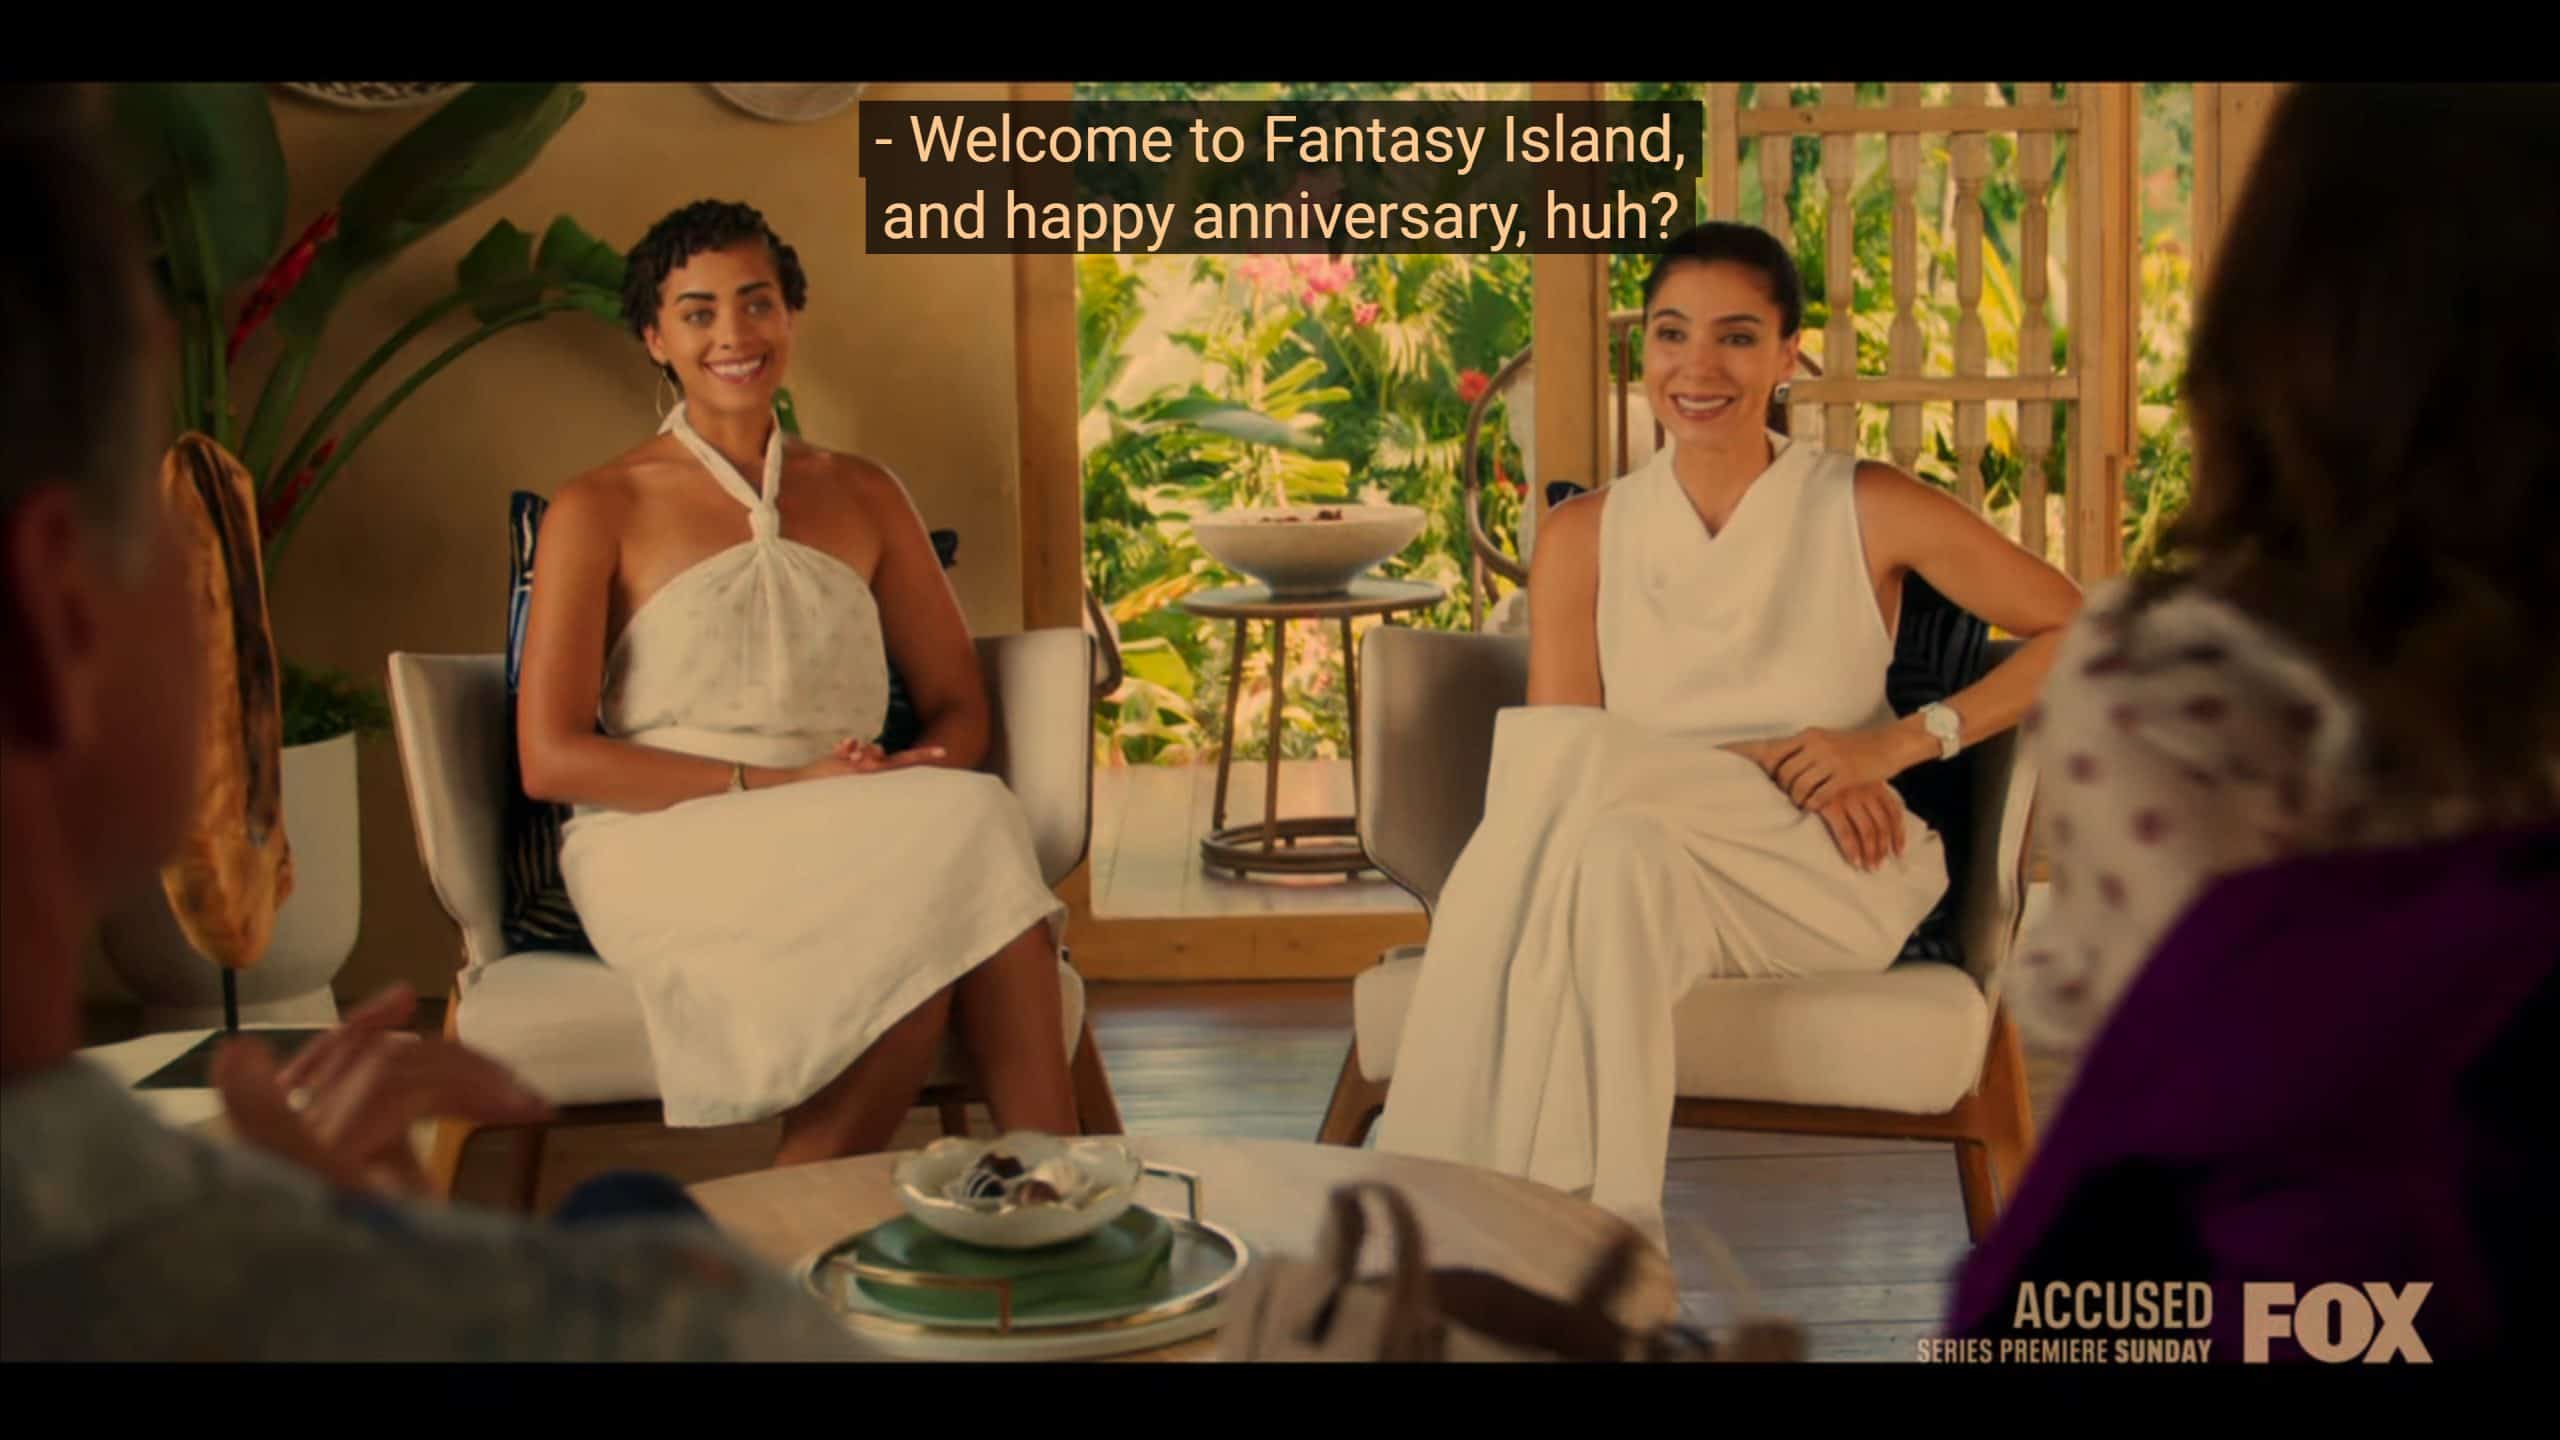 Elena greeting guests to Fantasy Island